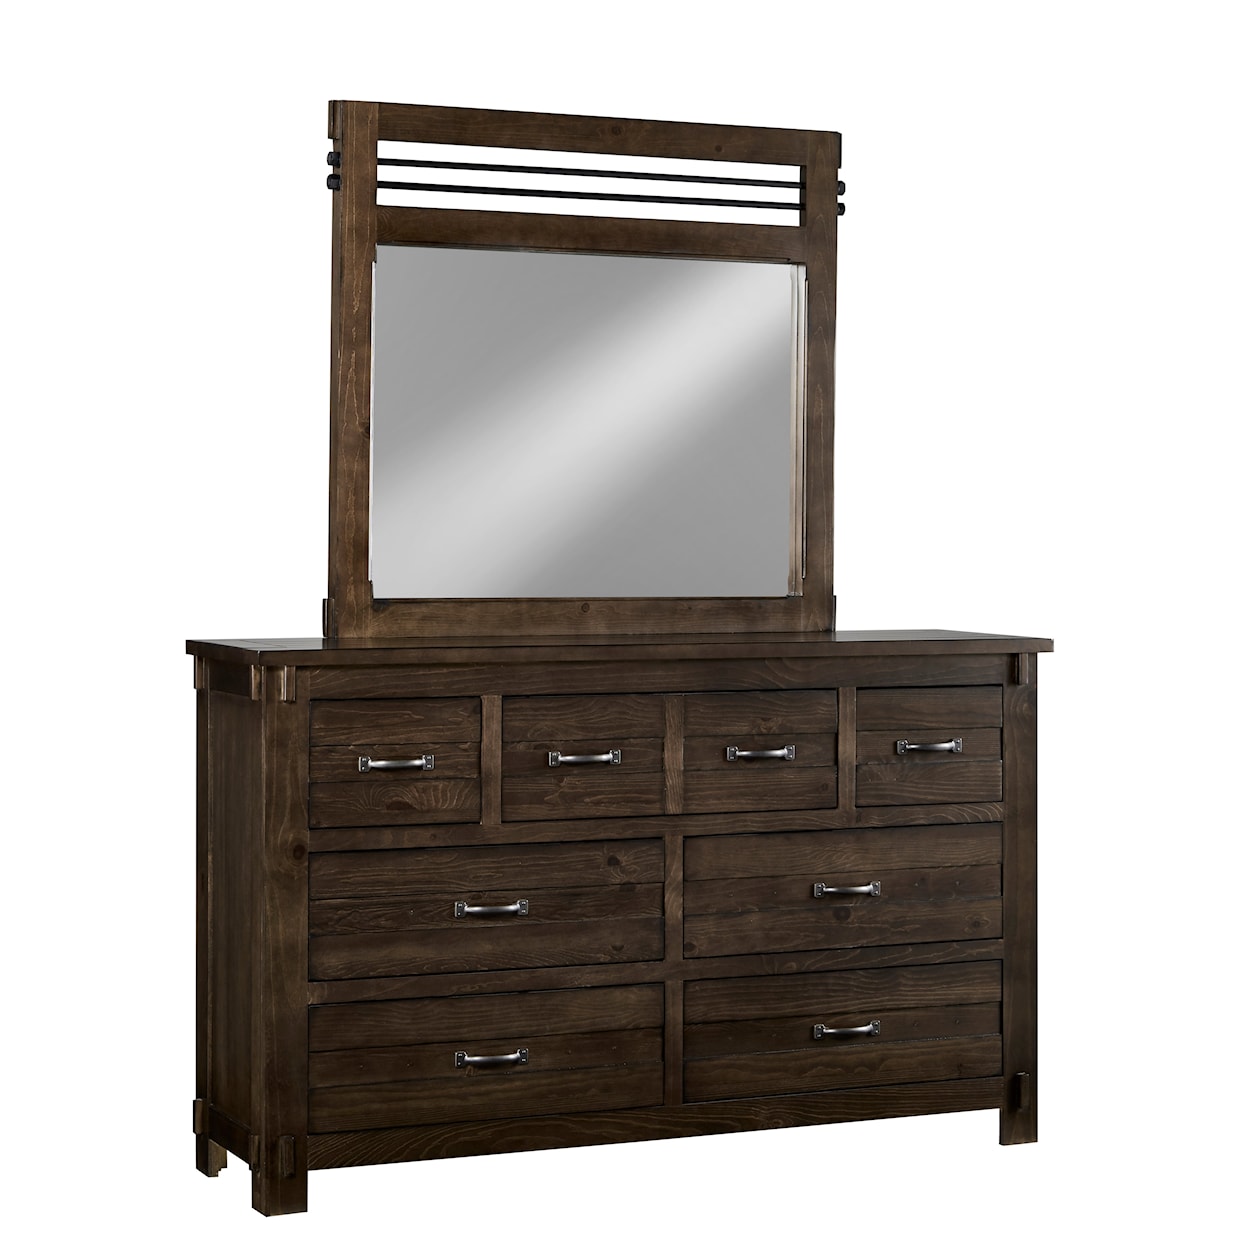 Carolina Chairs Thackery Drawer Dresser/Mirror